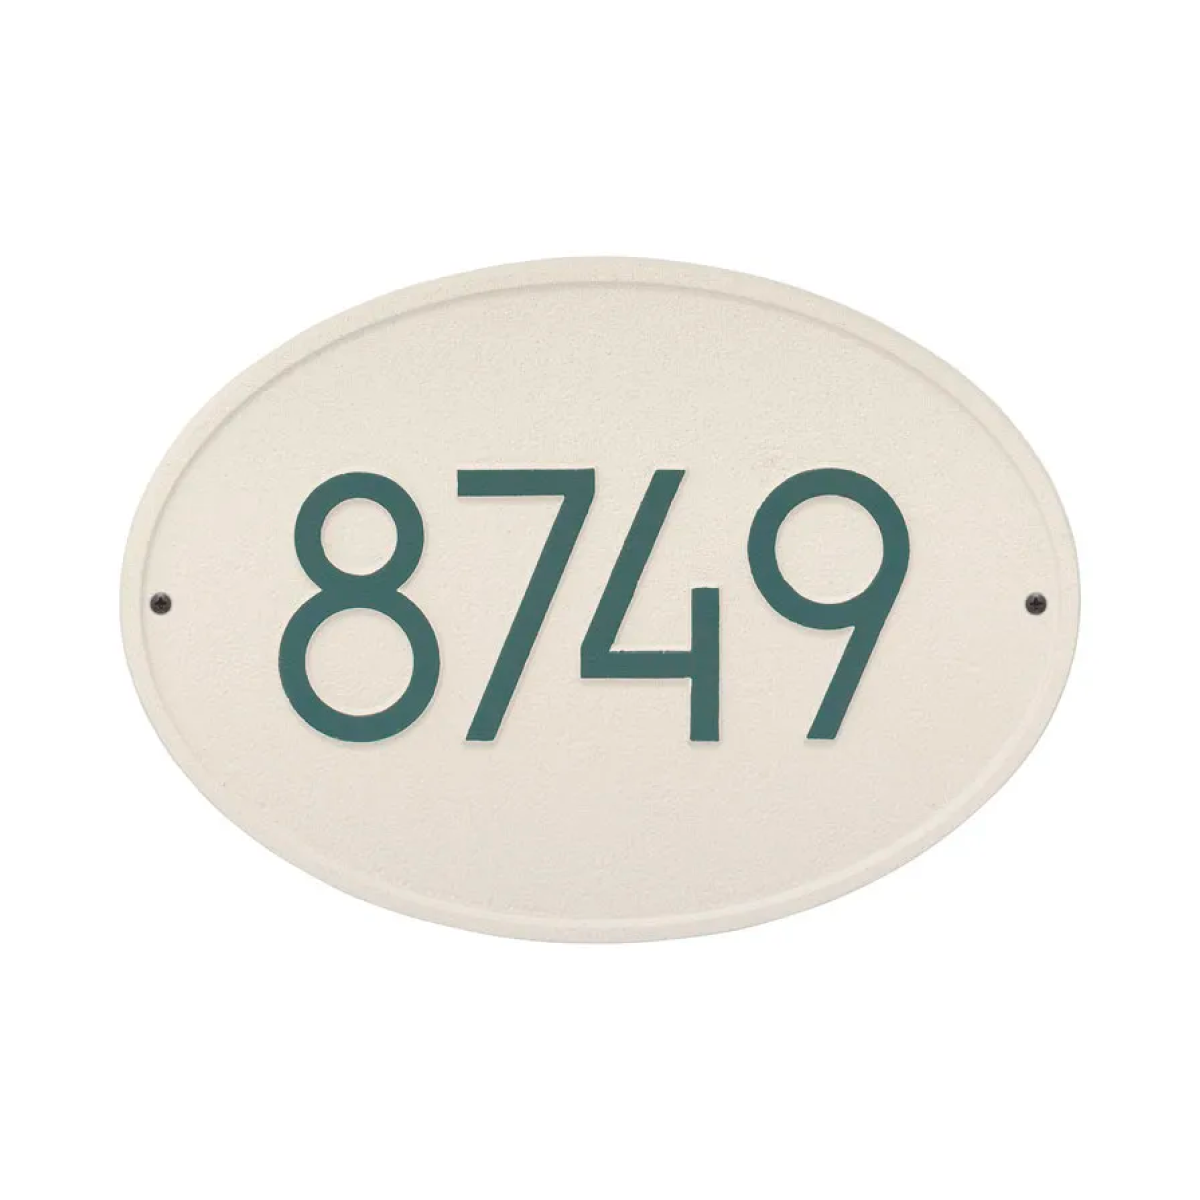 Whitehall Hawthorne Oval Modern Address Plaque Product Image